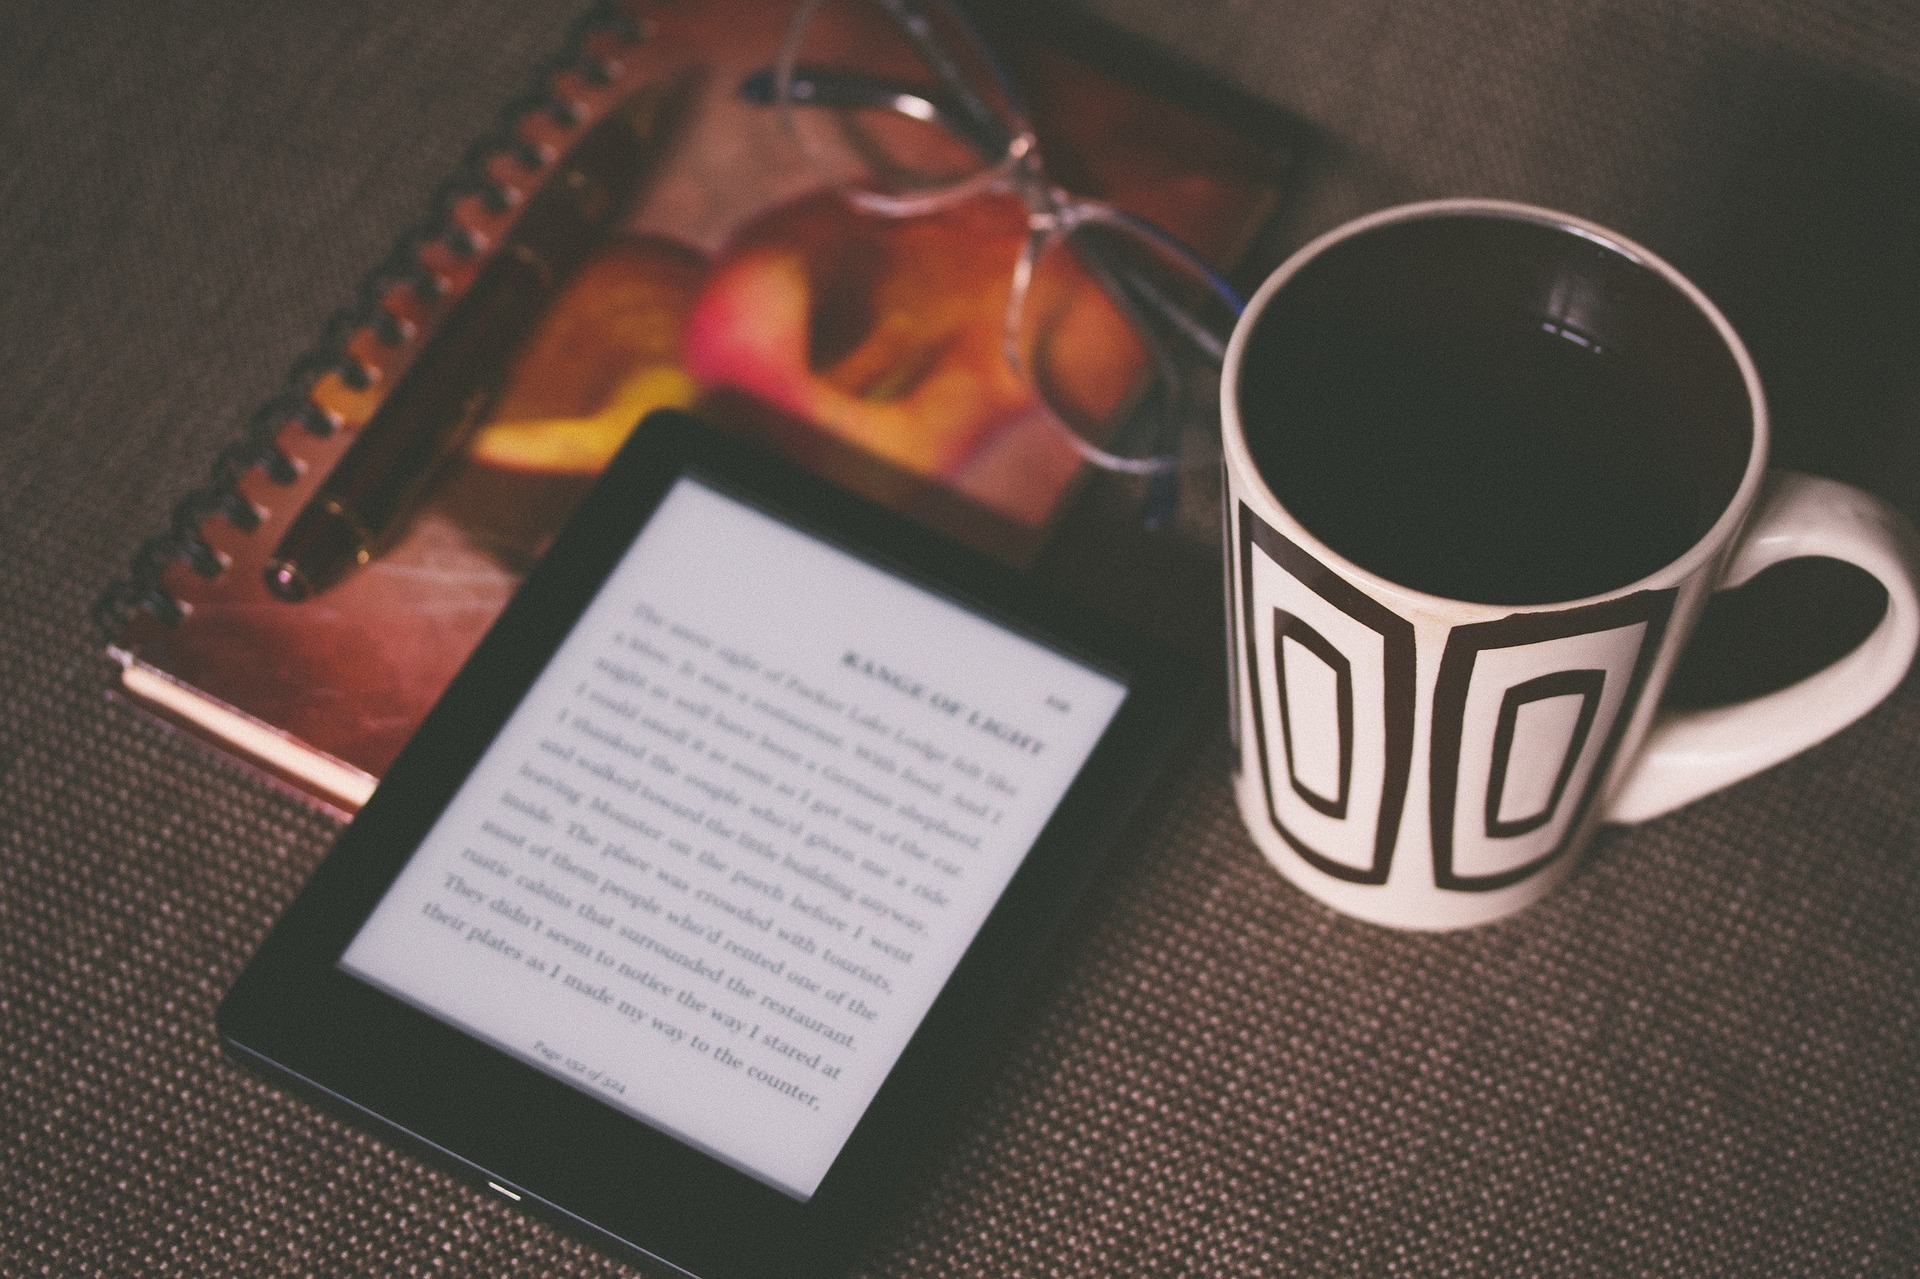 Ebook-reading-with-mug